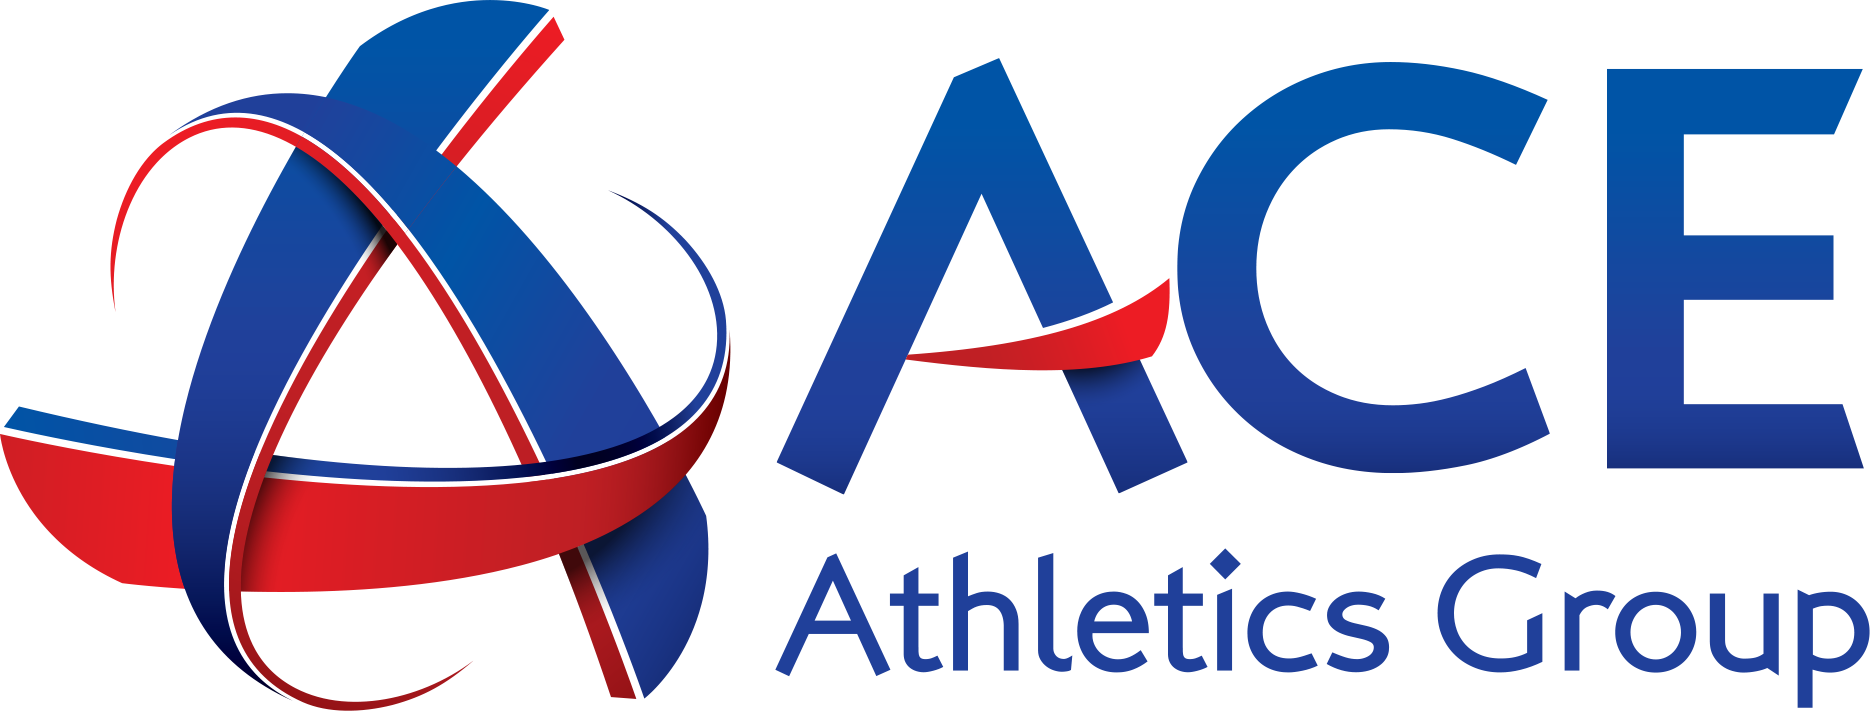 Ace Athletics Group Around the Horn Logo